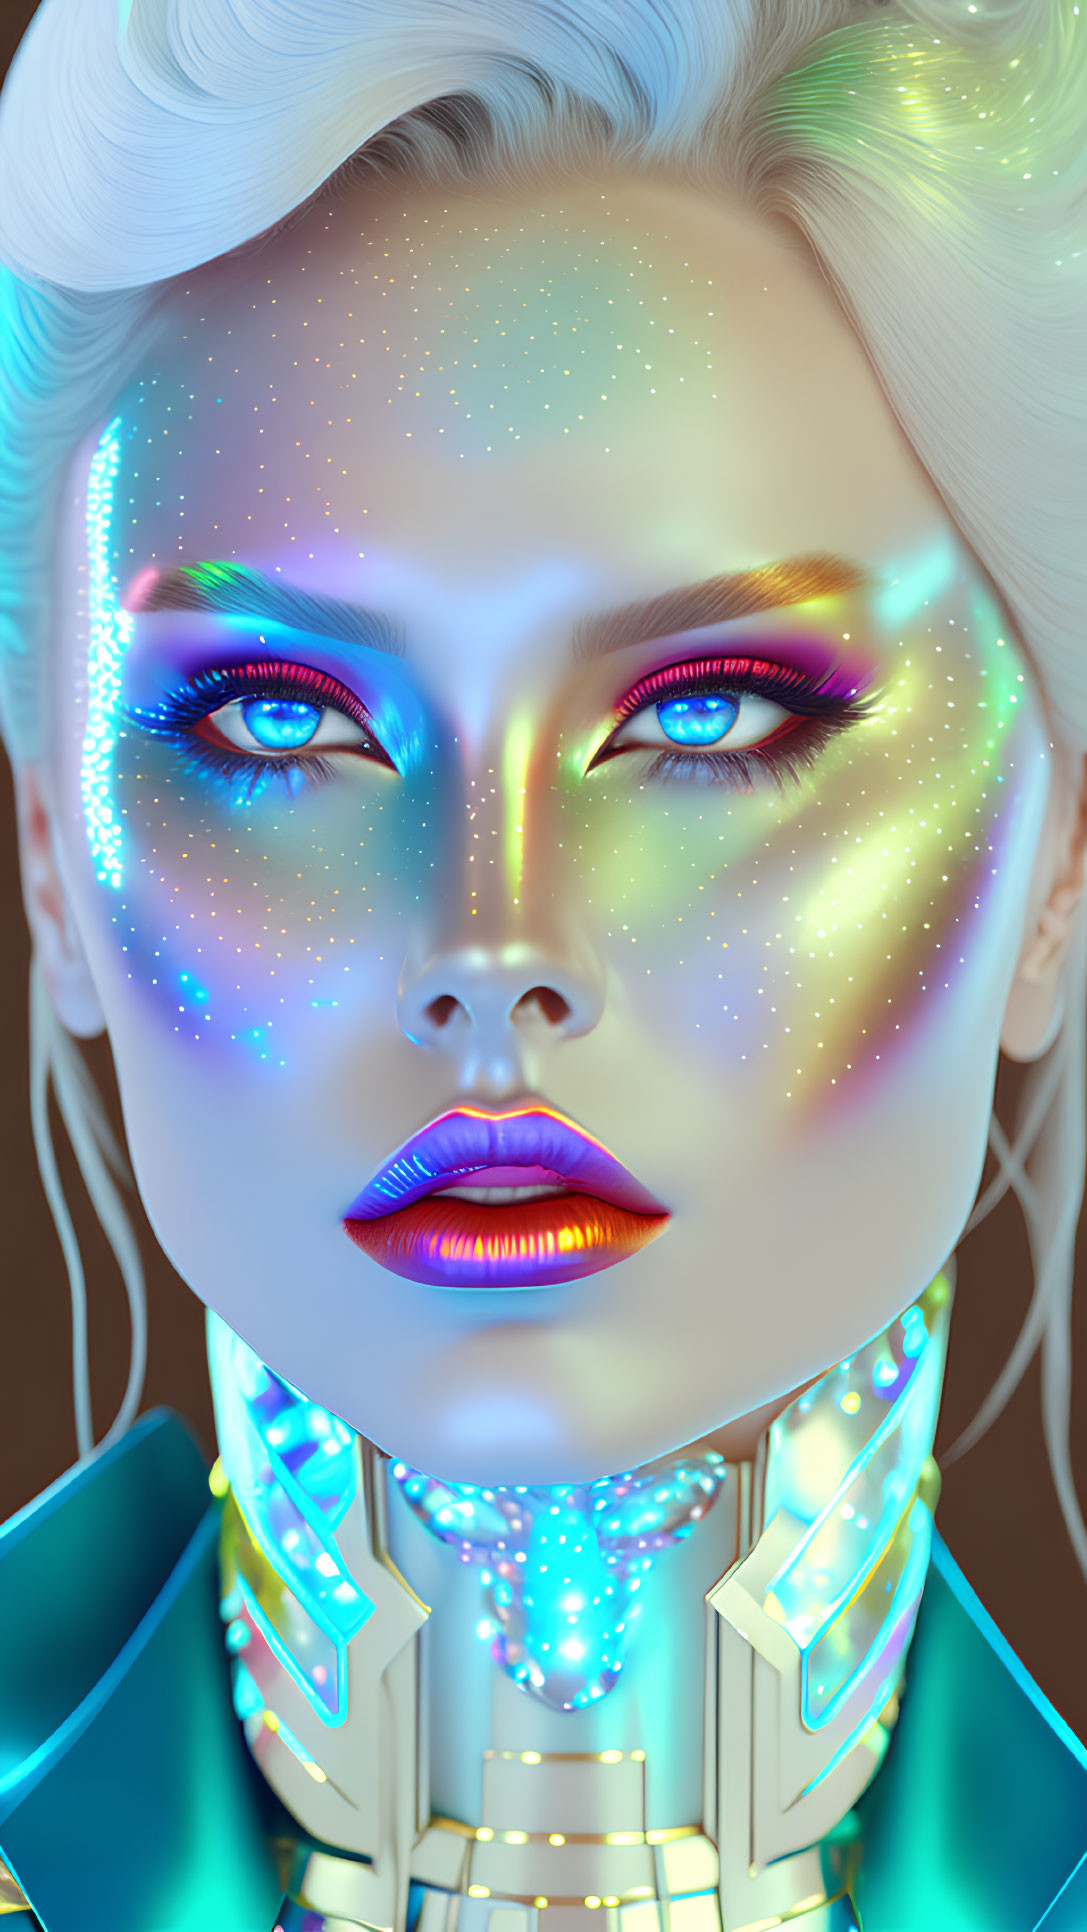 Iridescent Skin and Cosmic Makeup on Futuristic Woman